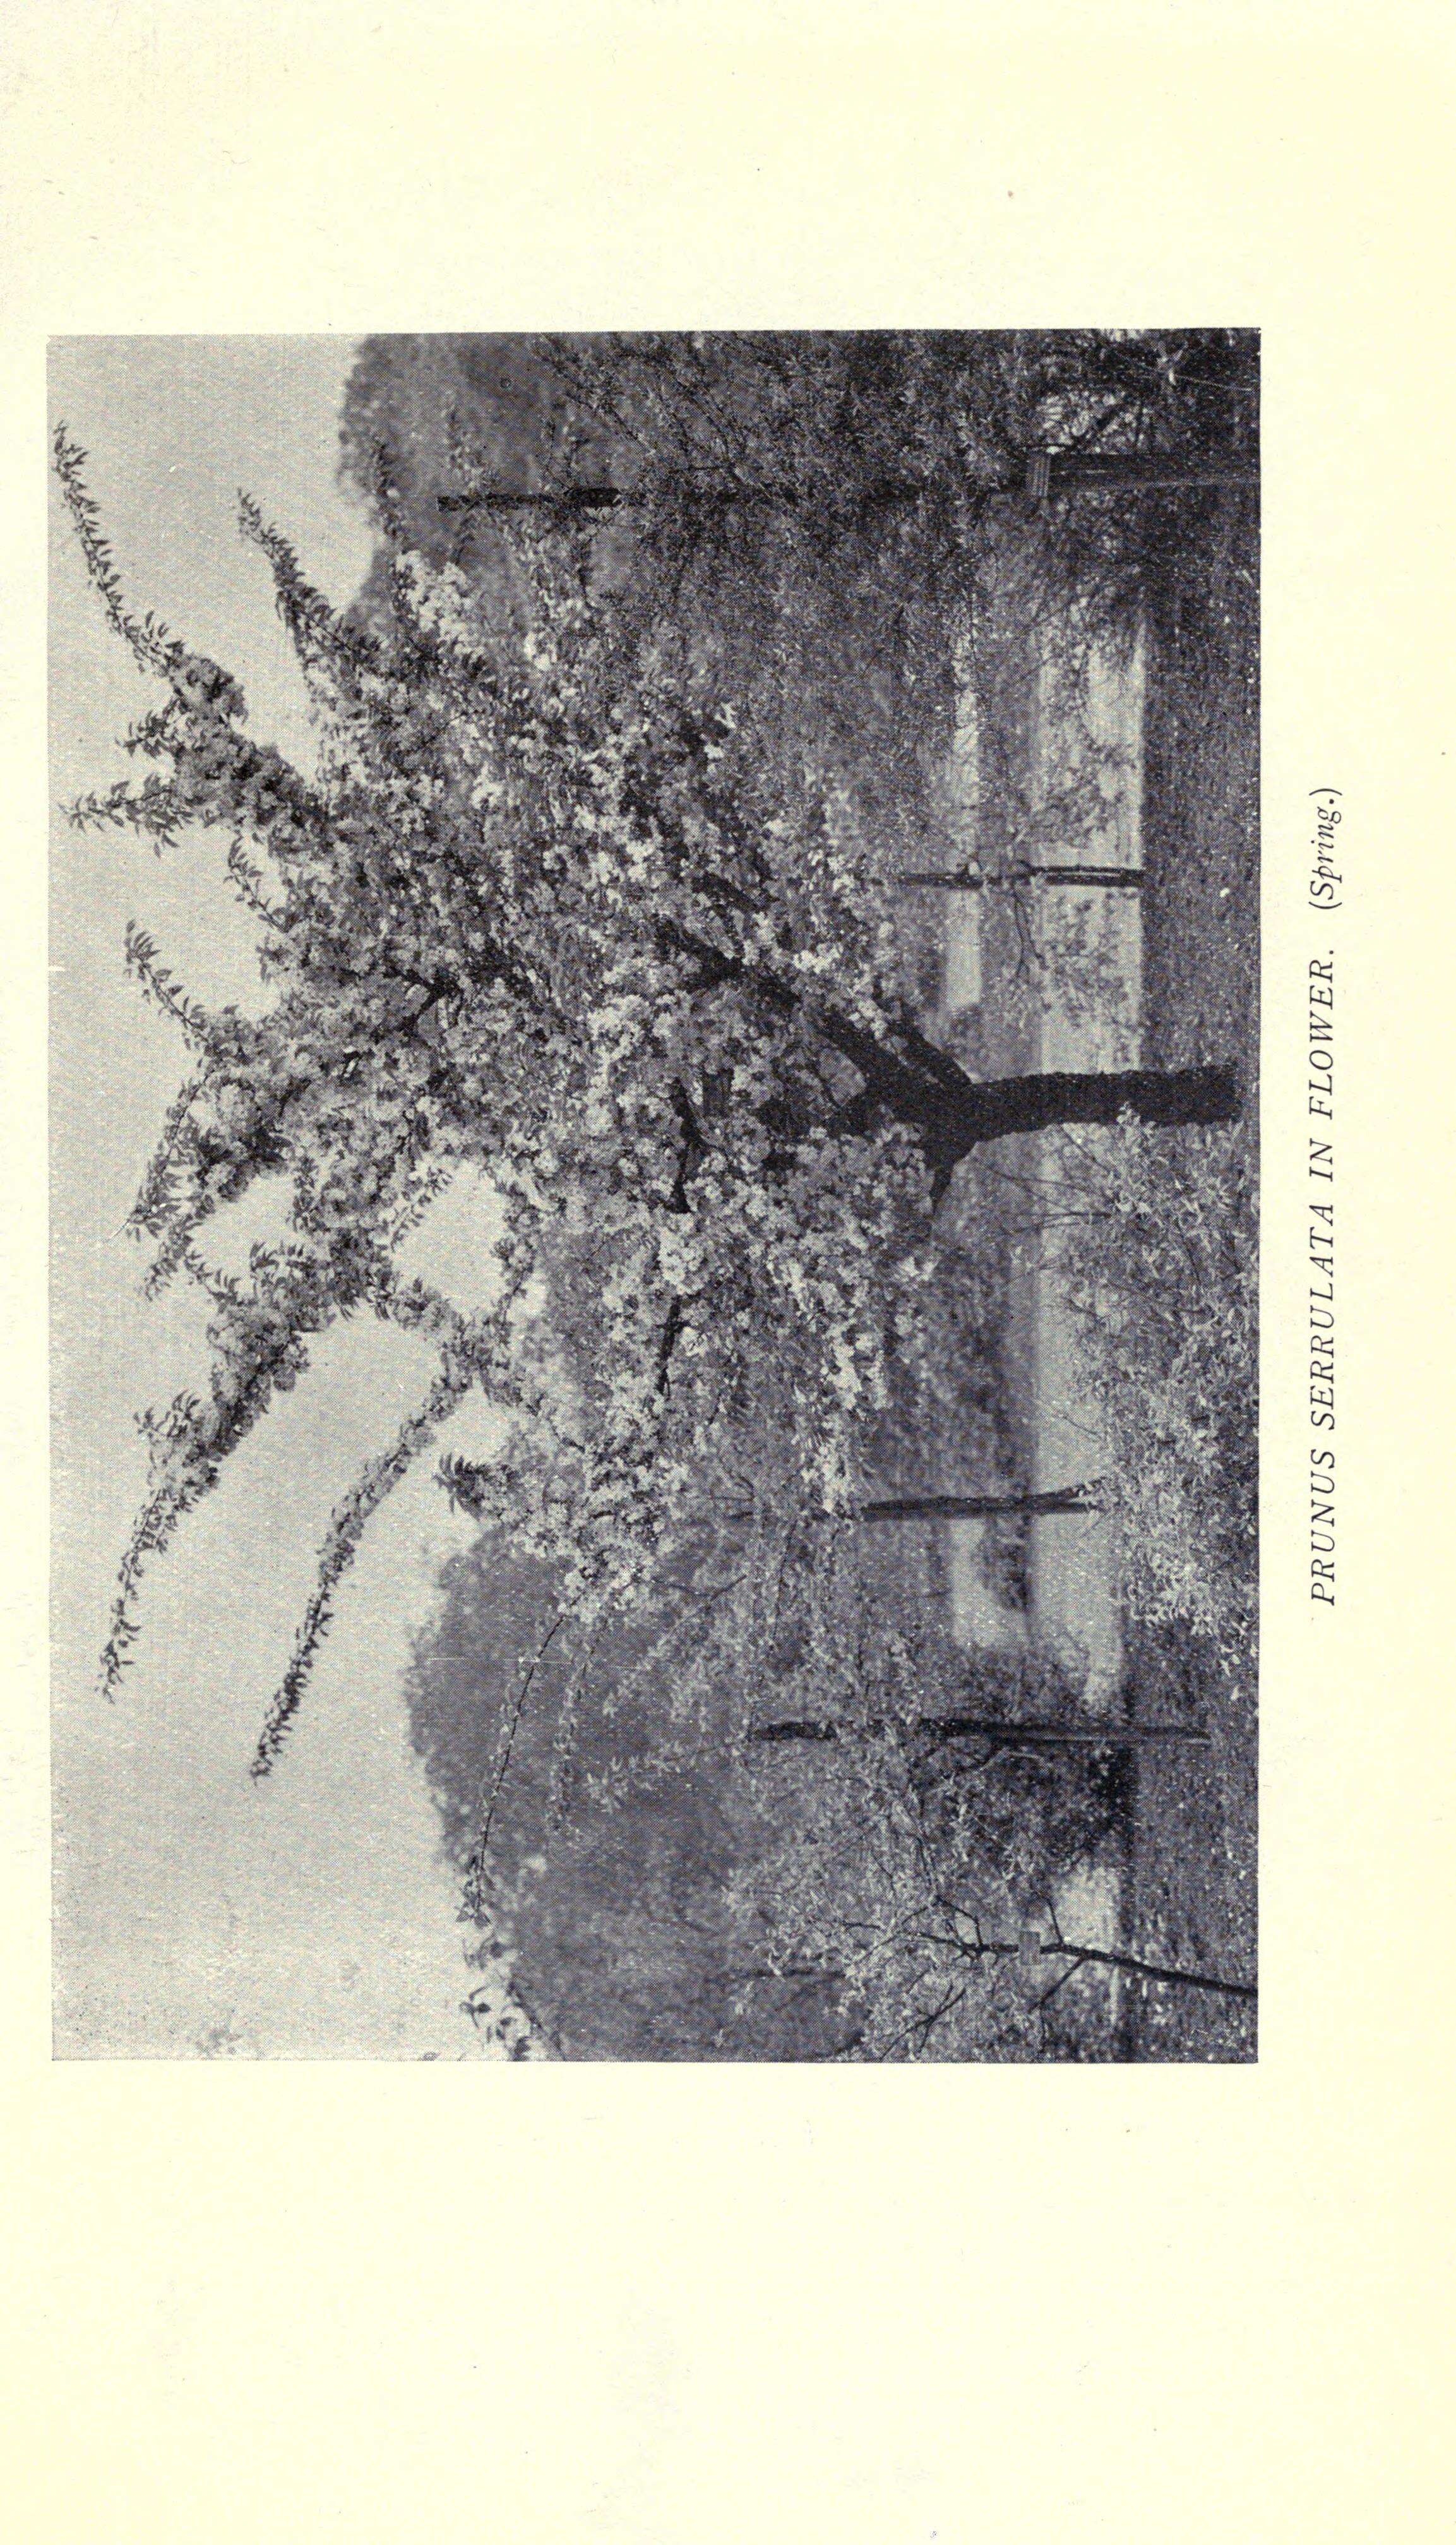 Image of plum